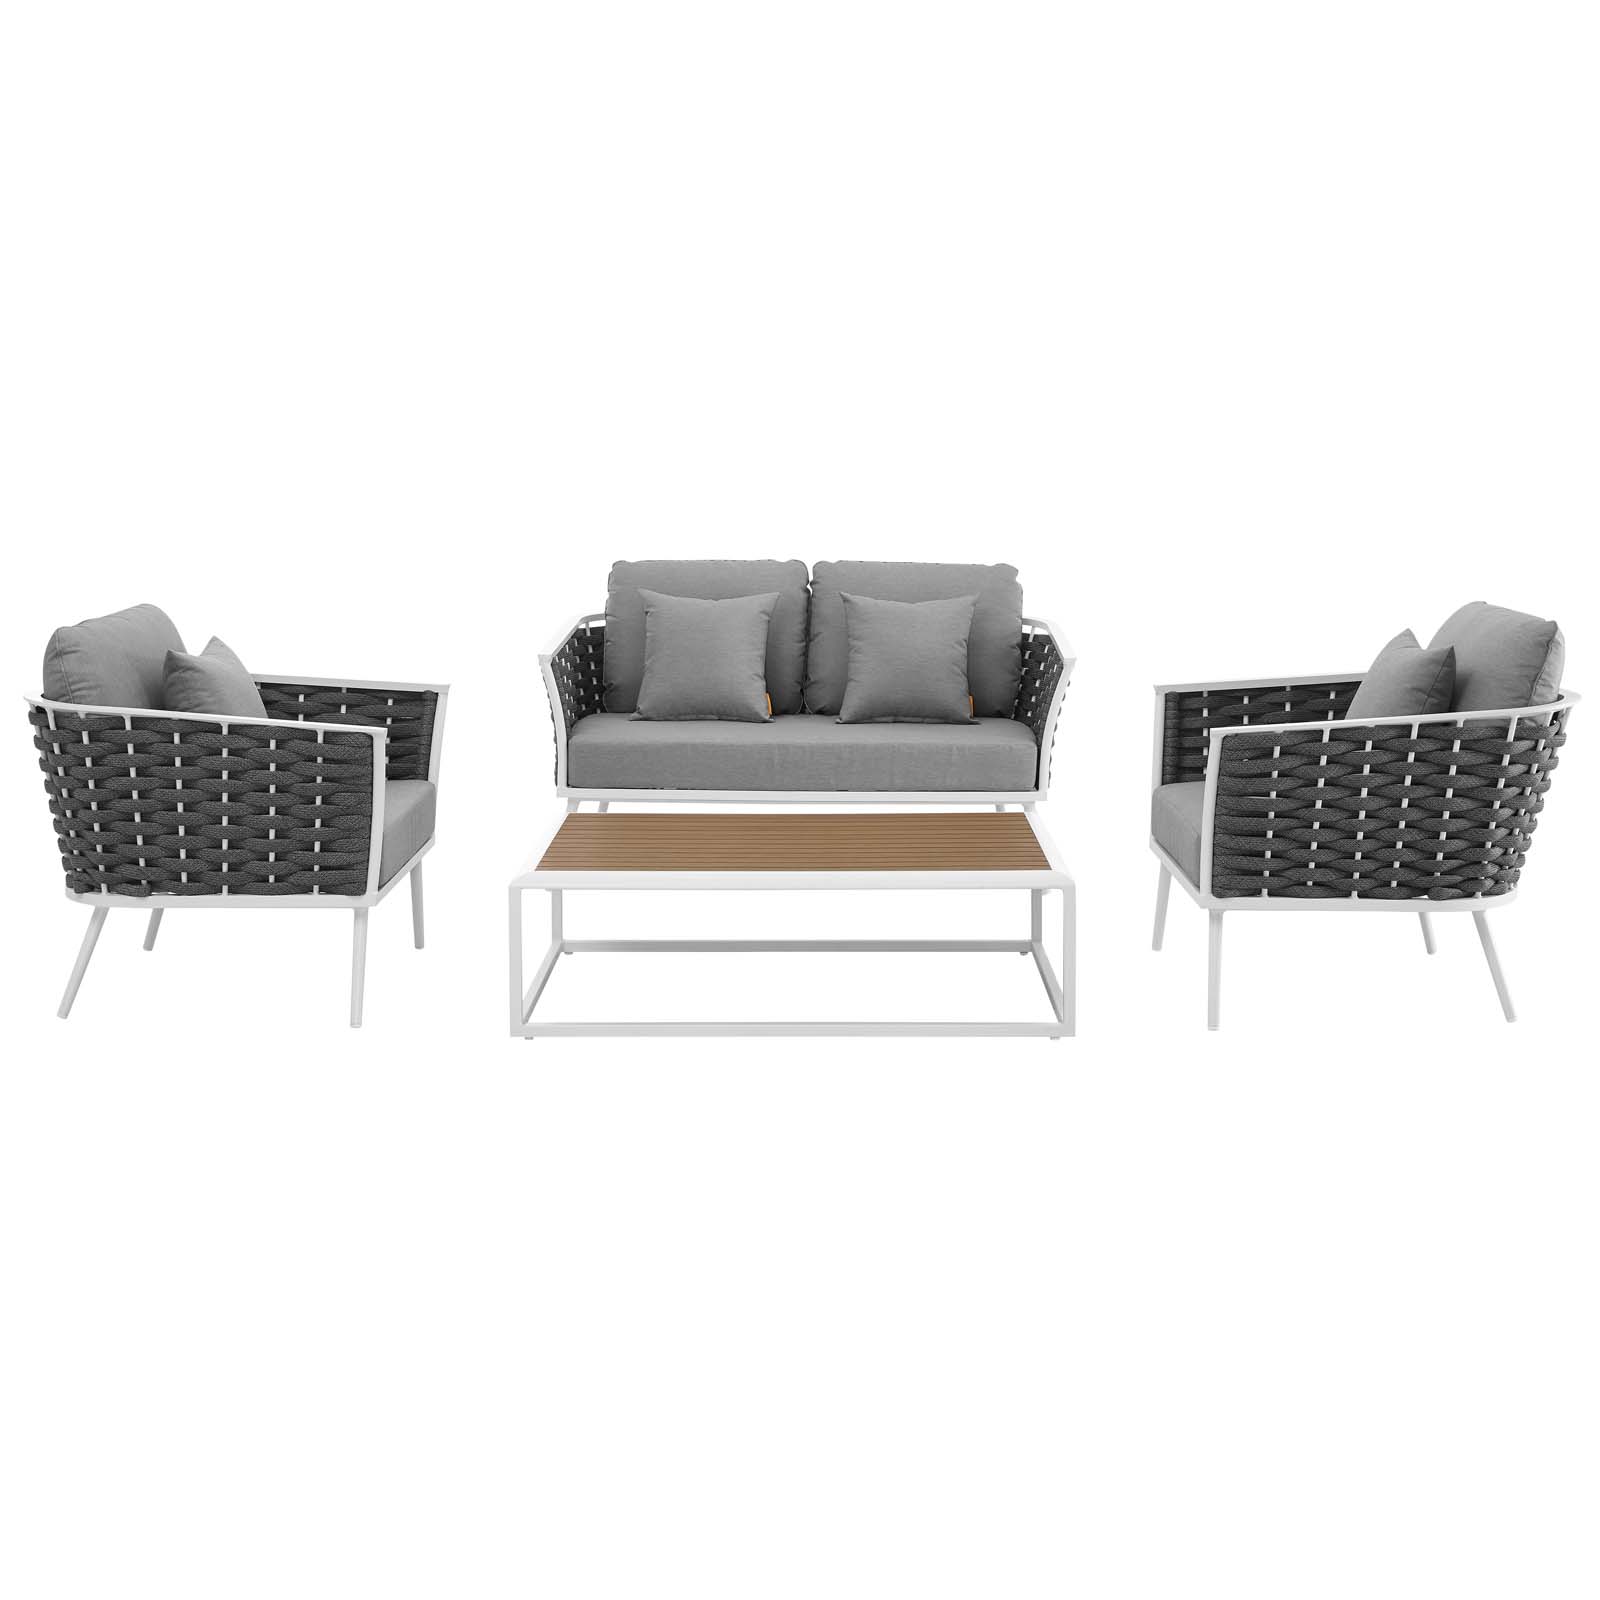 Modern Contemporary Urban Design Outdoor Patio Balcony Garden Furniture Lounge Chair and Sofa Set, Fabric Aluminium, White Grey Gray - image 4 of 8